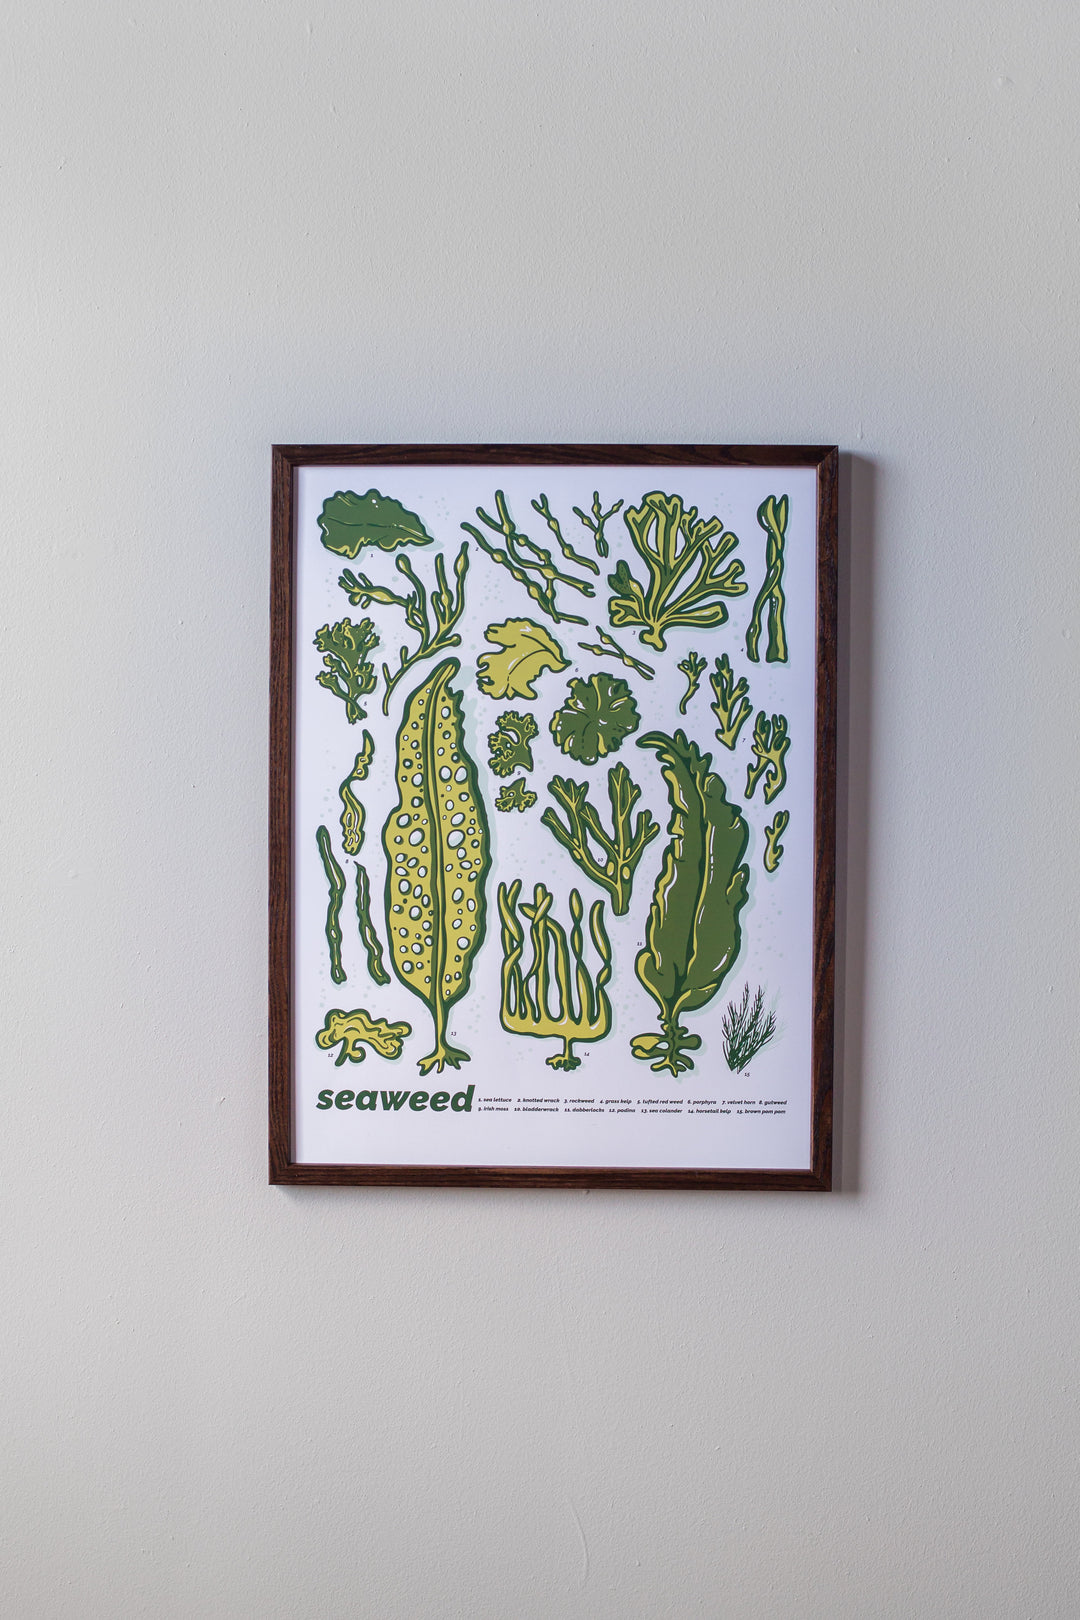 Seaweed Print by Brainstorm - Kelp, Porphyra, Knotted Wrack, Bladderwrack, Irish Moss! 